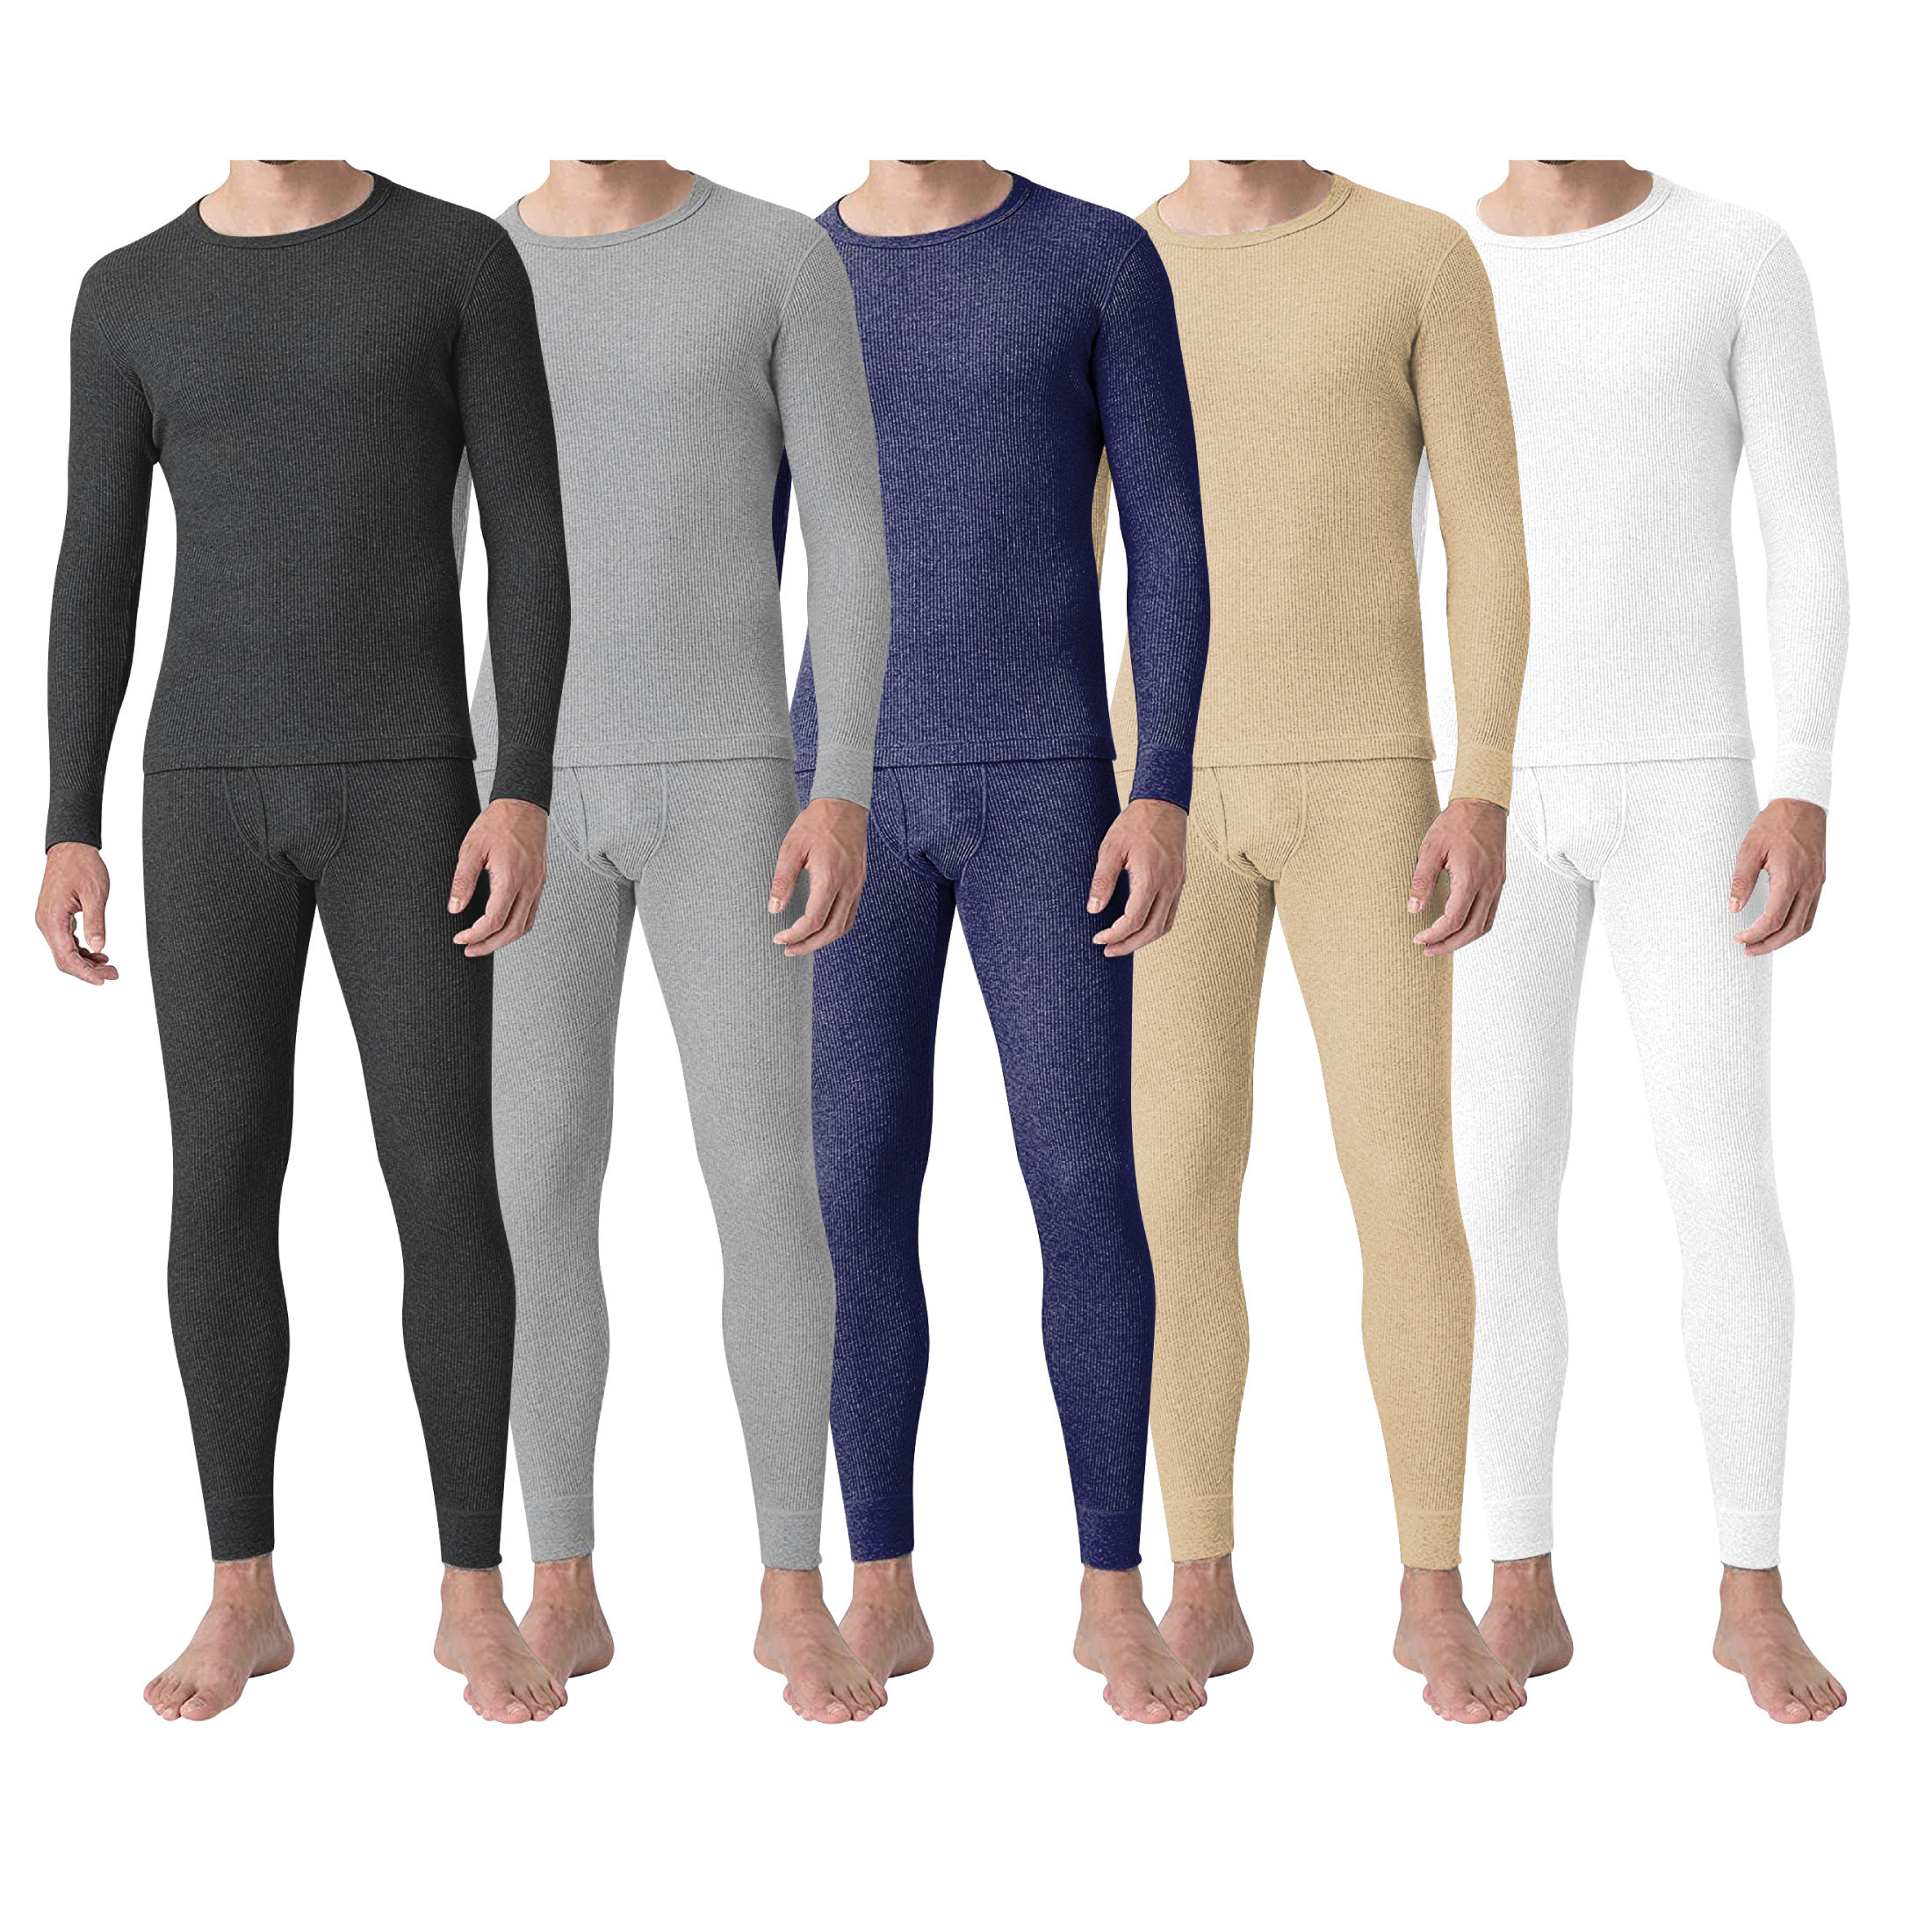 2-Piece: Men's Super Soft Cotton Waffle Knit Winter Thermal Underwear Set - Tan, X-Large